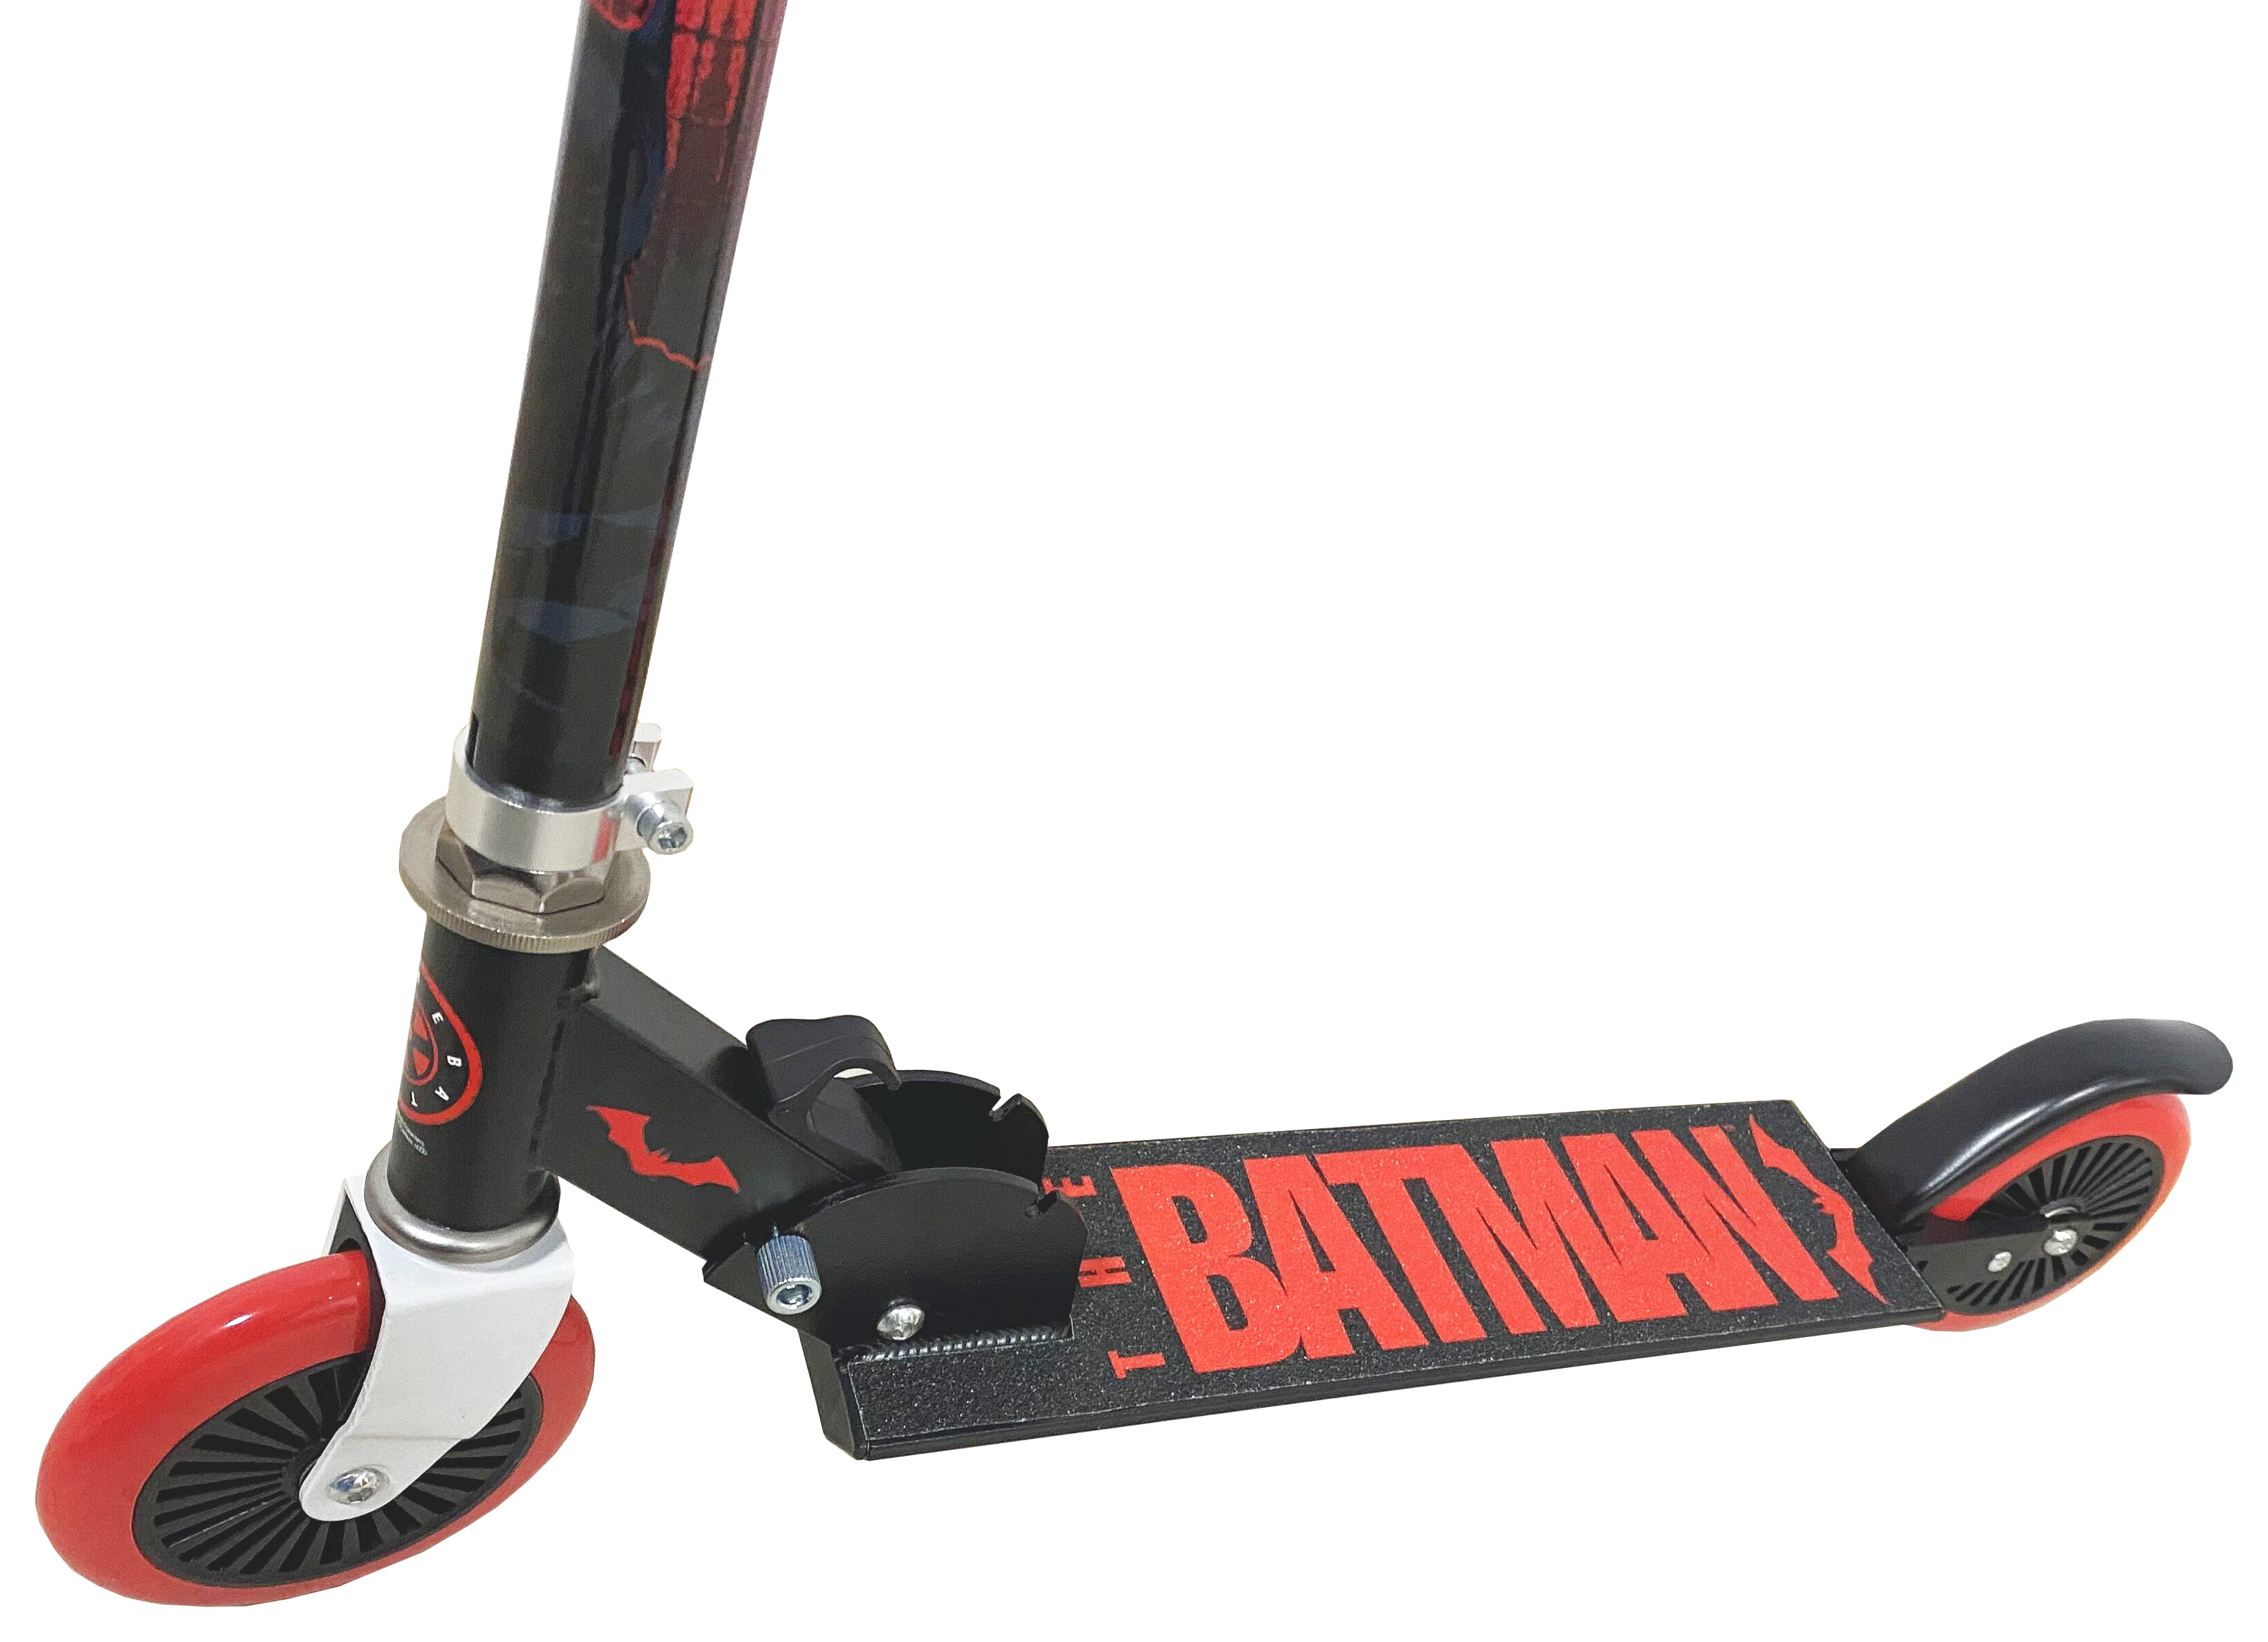 120mm Batman Scooter